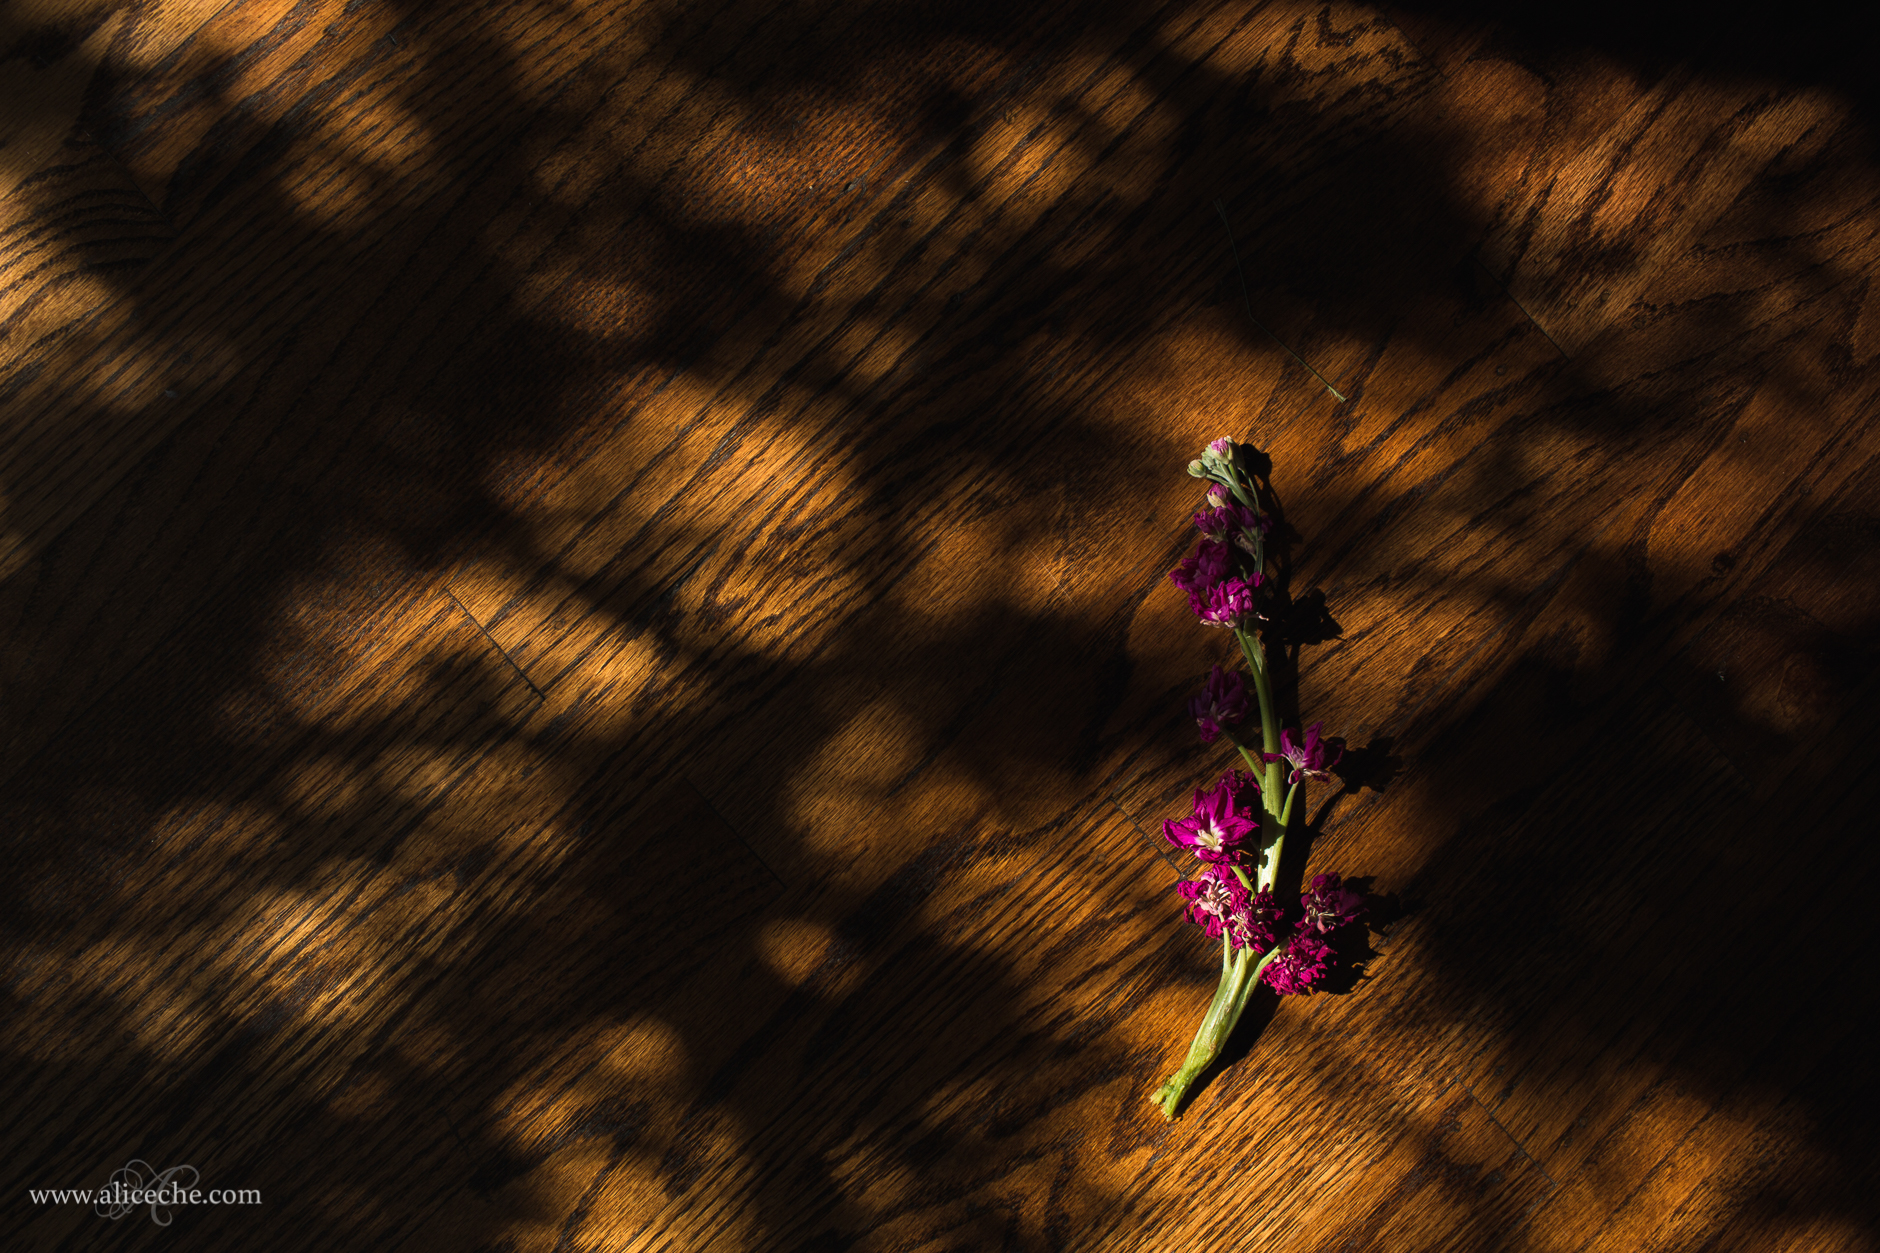 alice-che-photography-tutorial-dappled-light-flower